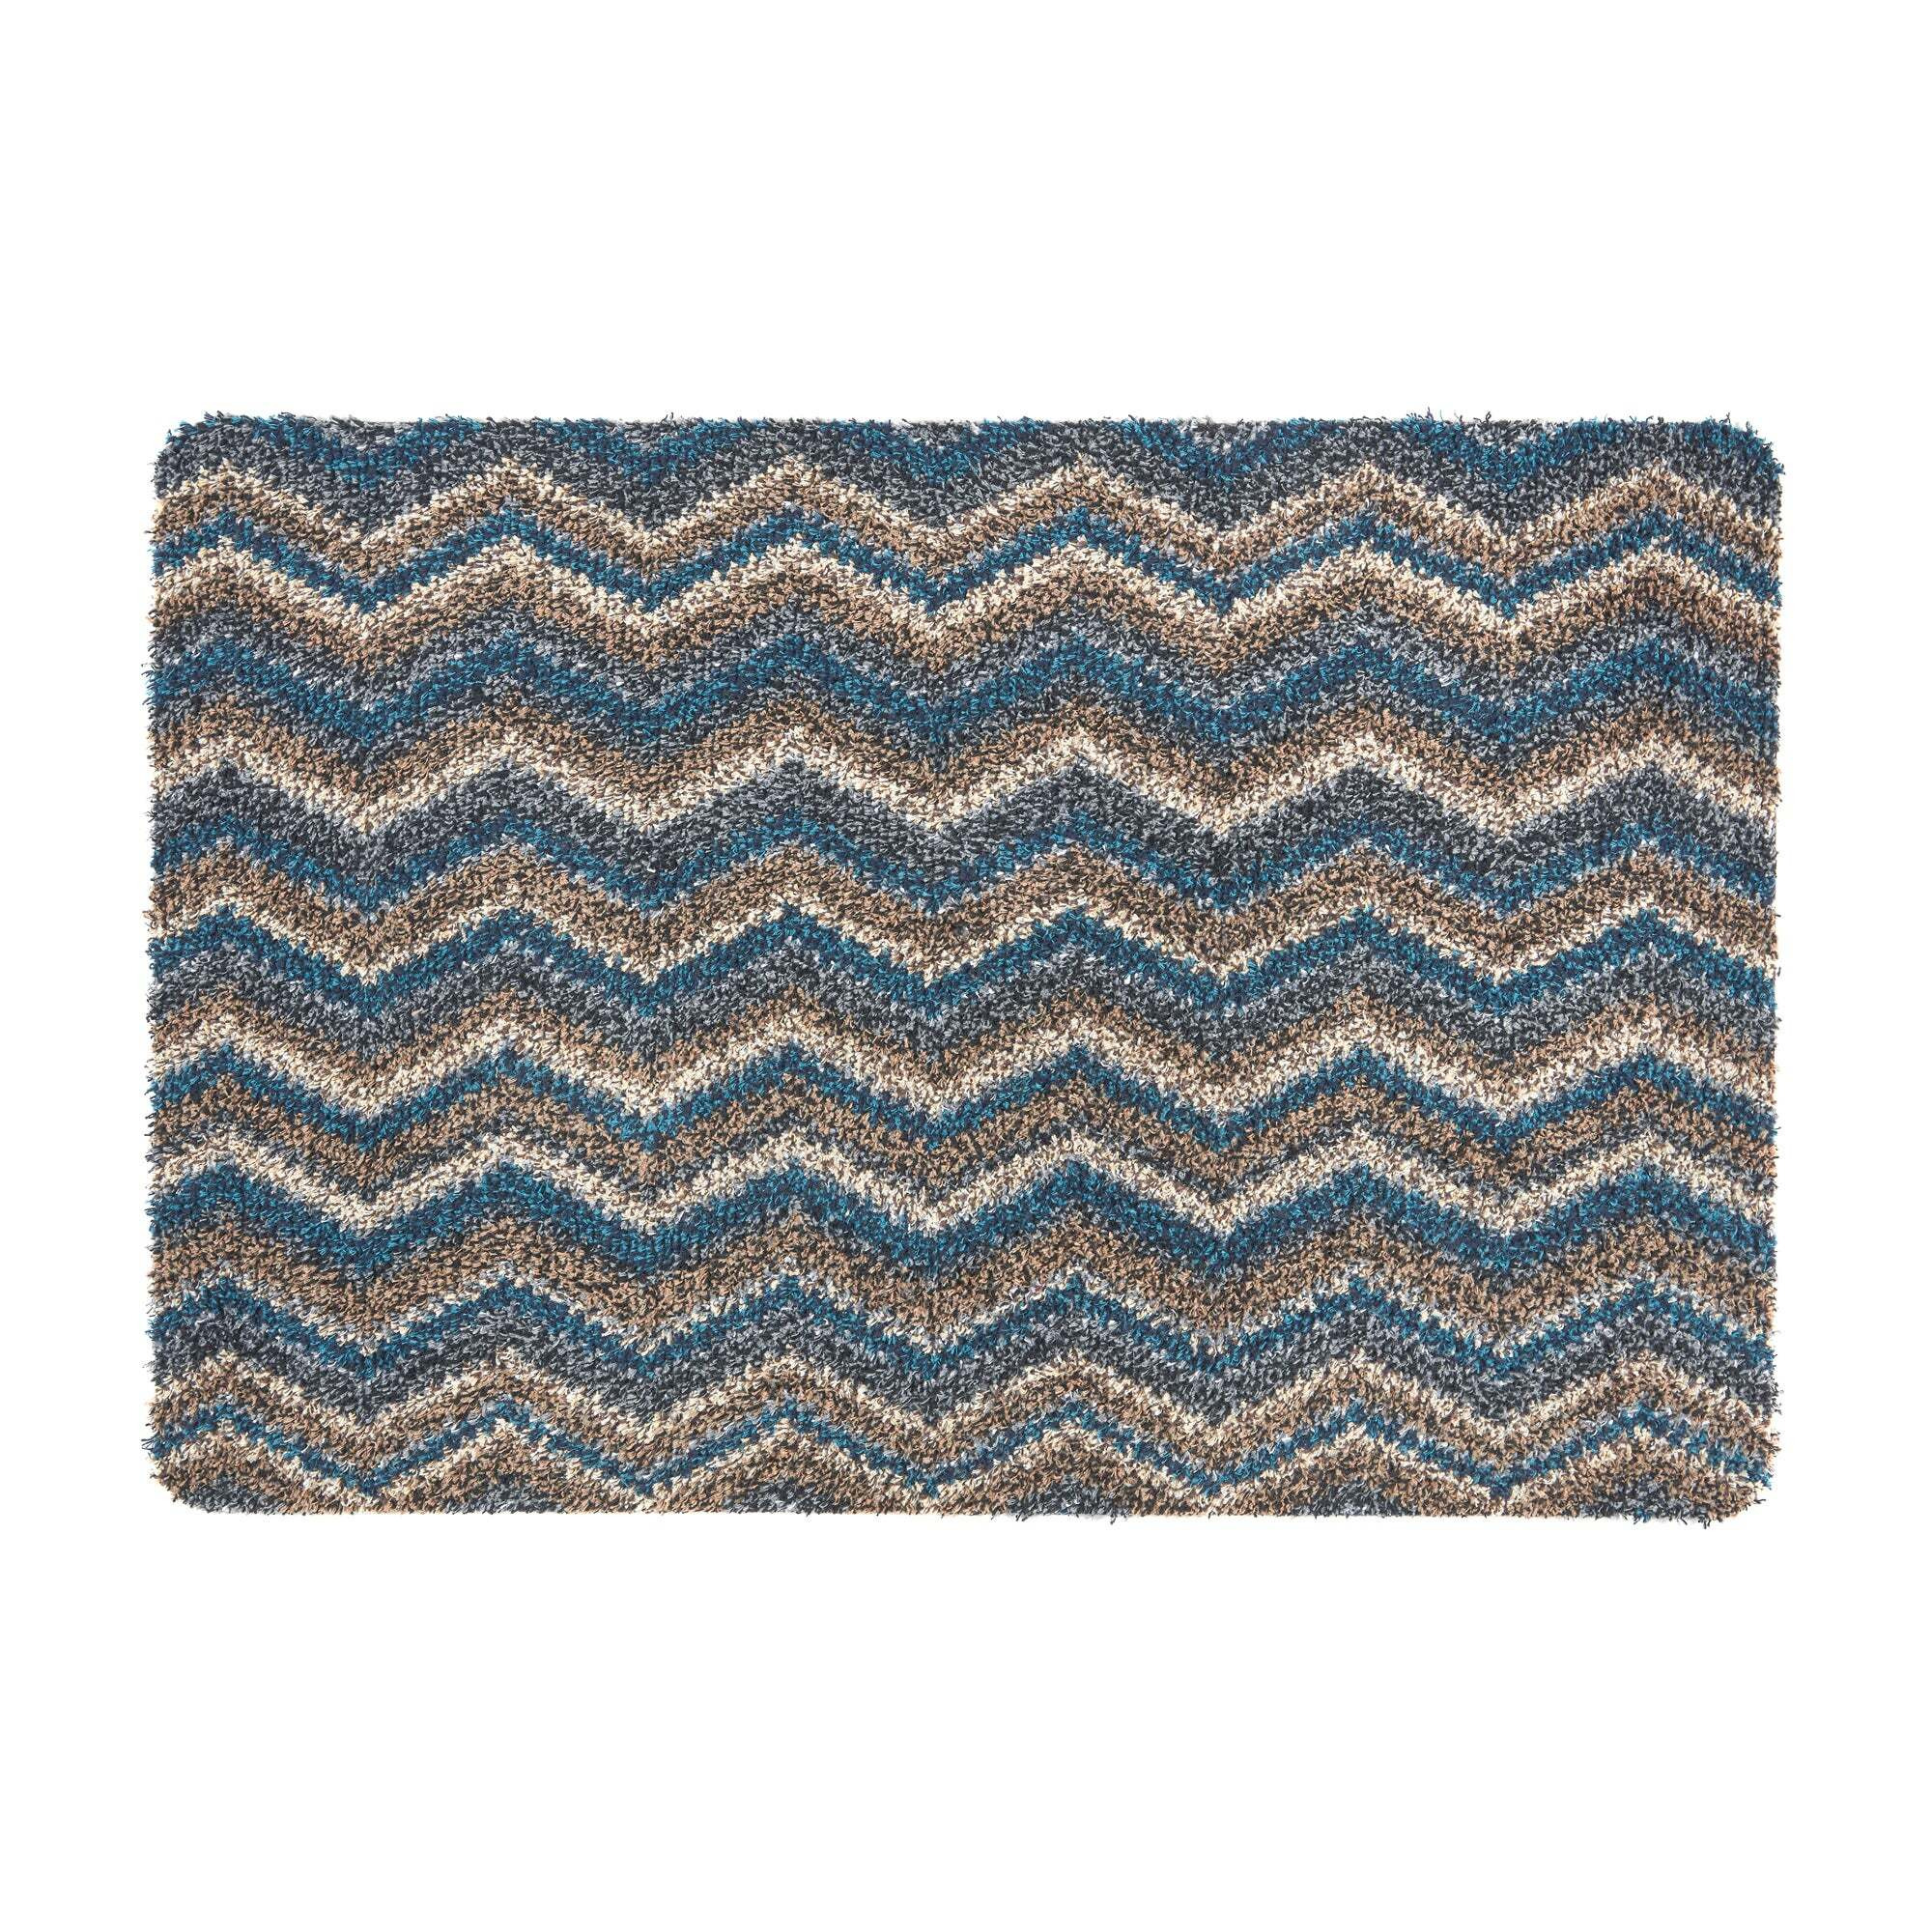 Missouri Recycled Cotton Doormat Blue/Brown